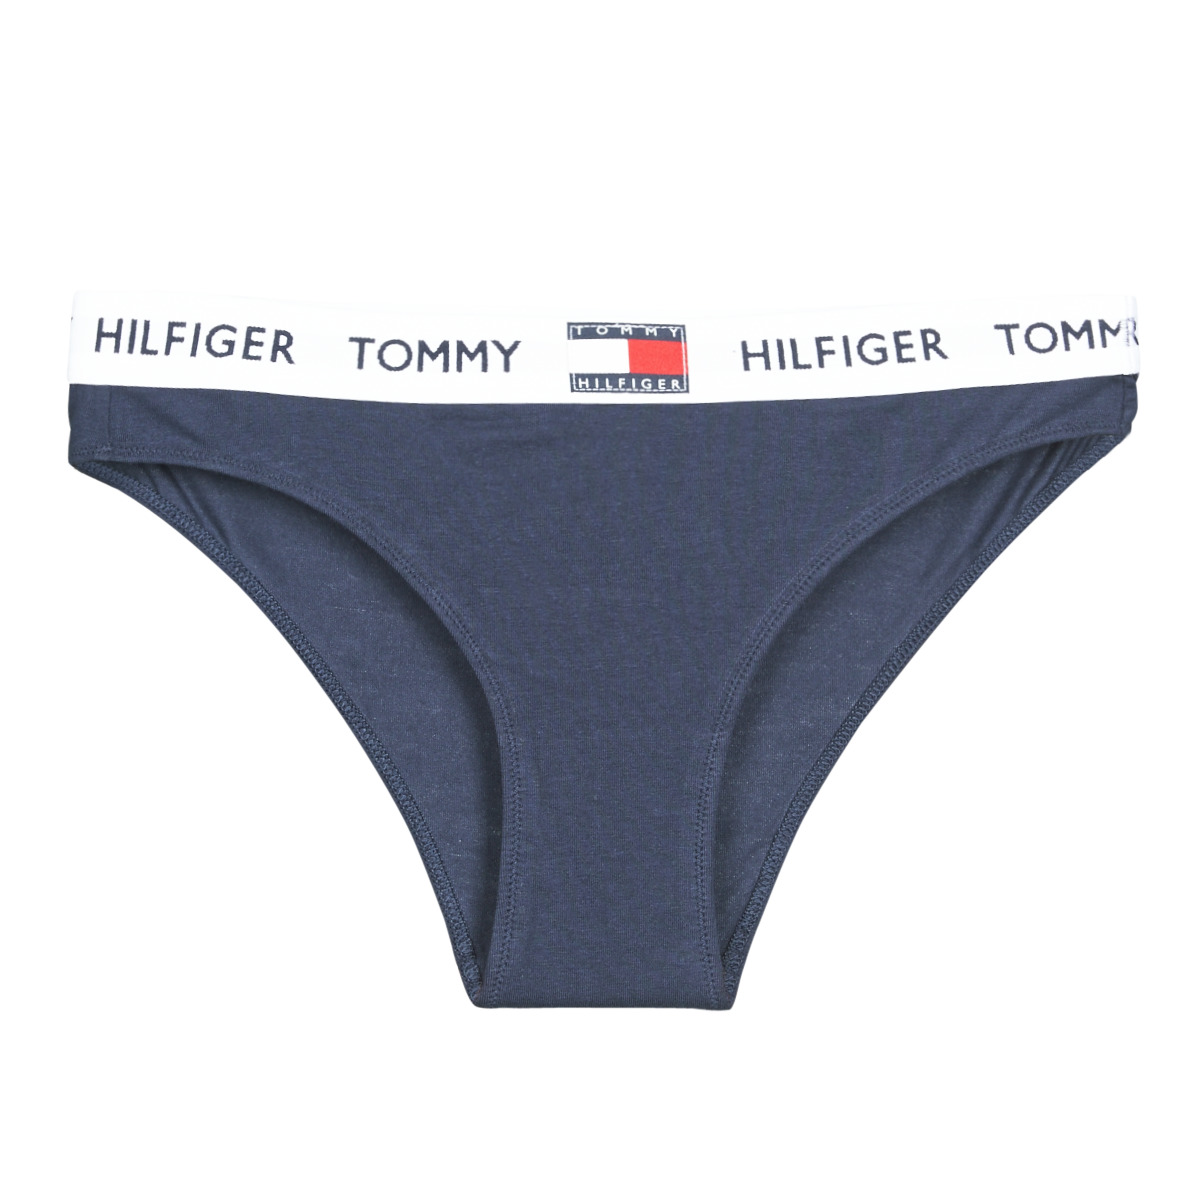 Tommy Hilfiger Flex Cotton Low-rise Briefs in Black for Men